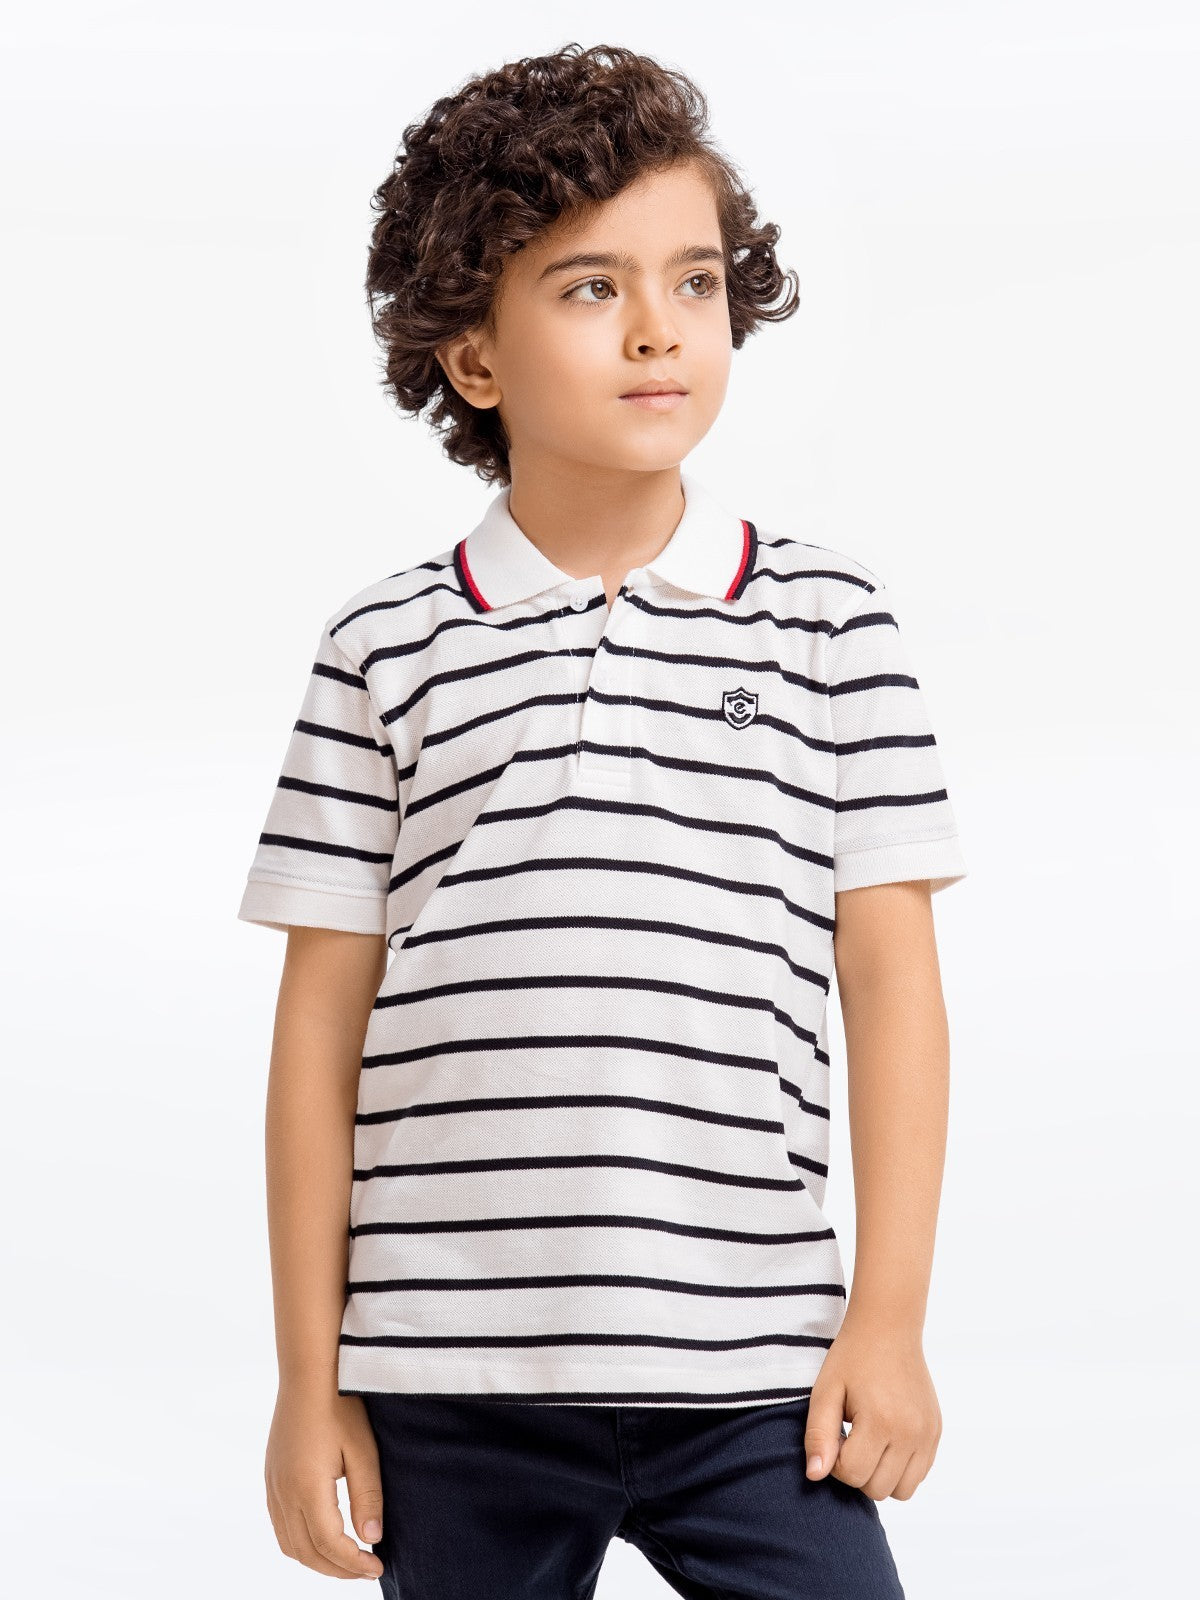 Boy's White & Black Polo Shirt - EBTPS23-008